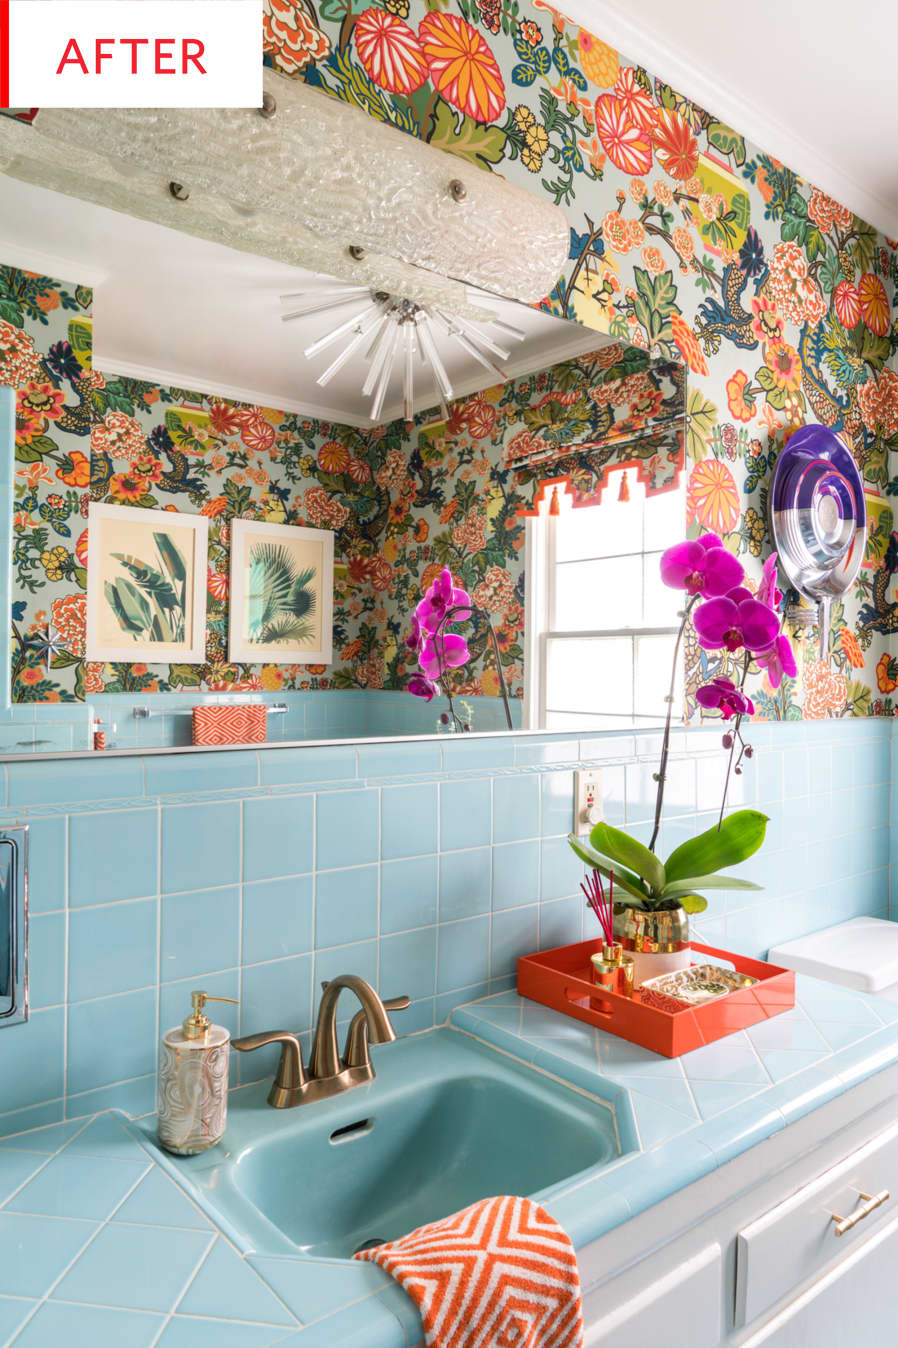 Coloured Vintage Bathroom Suites